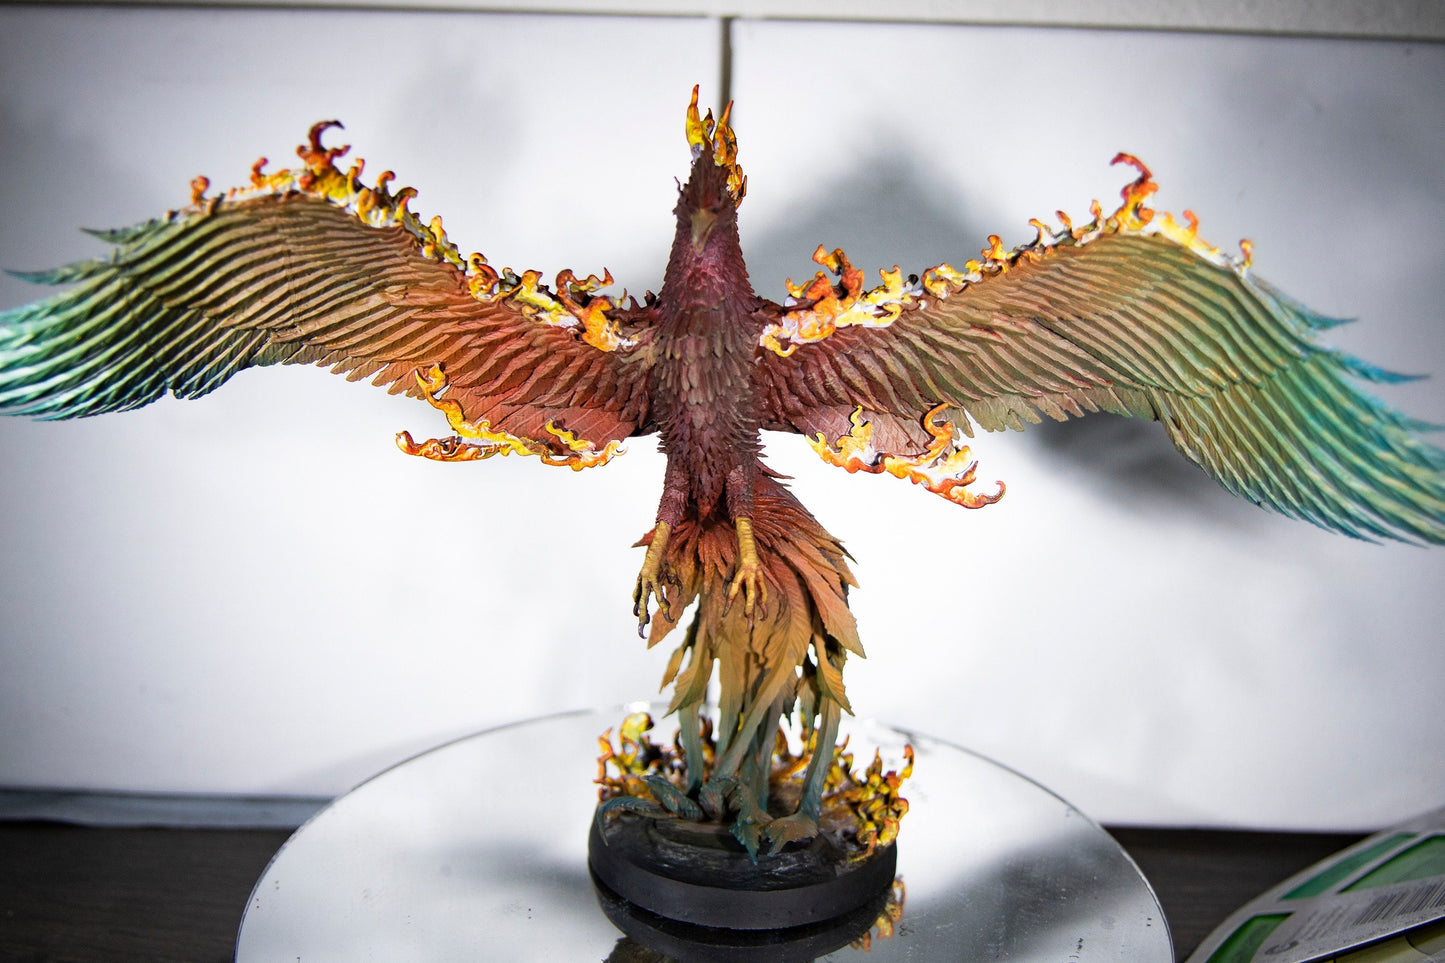 Phoenix Painted Model - Mini Monster Mayhem Printed Miniature | Dungeons & Dragons | Pathfinder | Tabletop